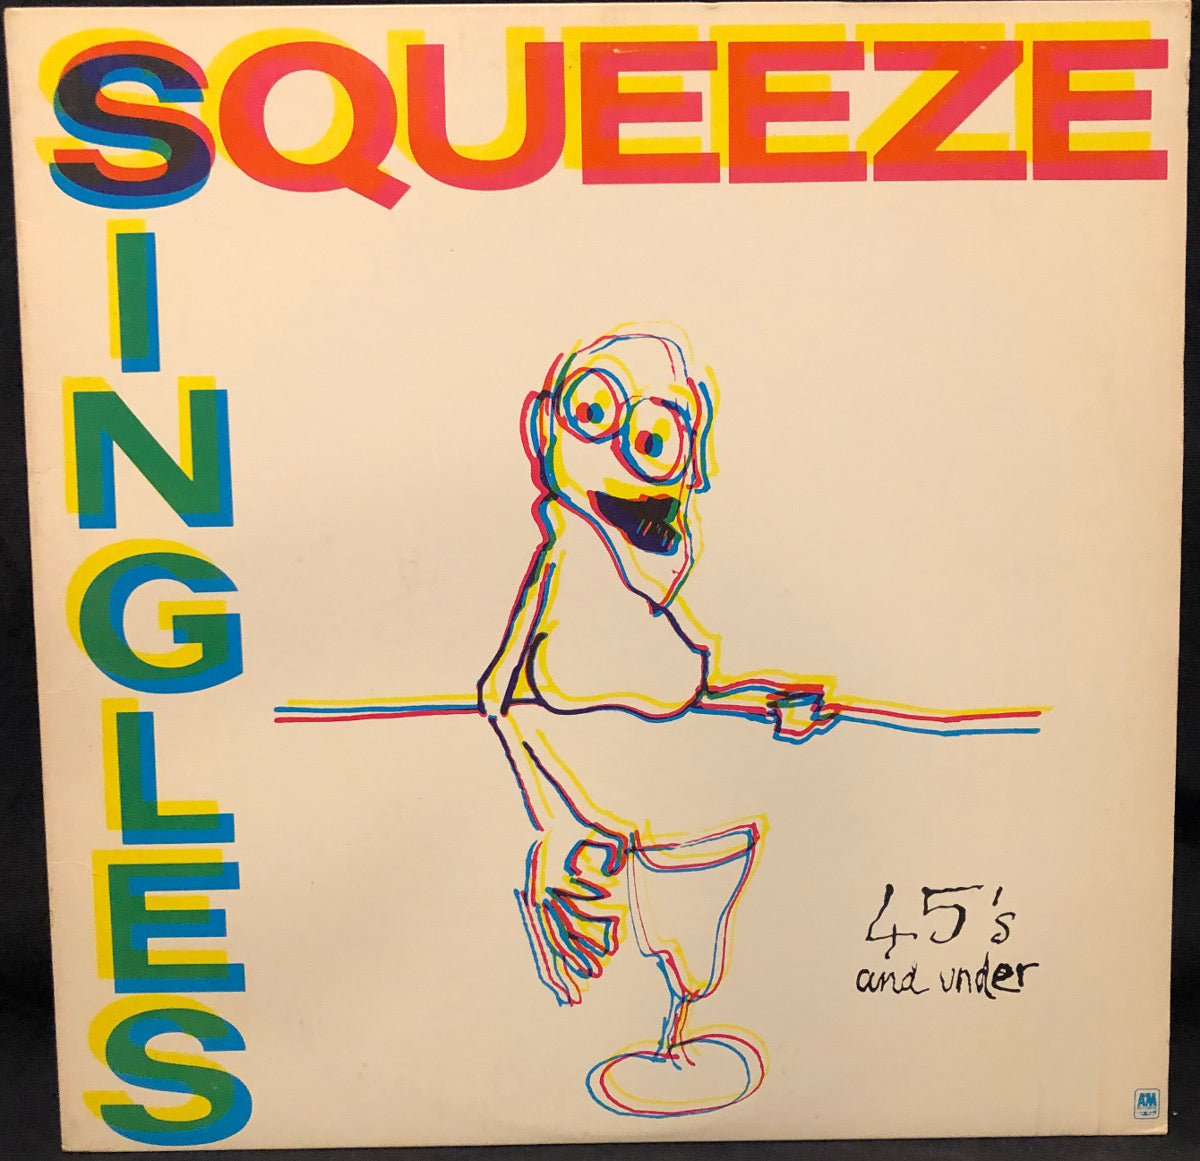 Squeeze - Singles